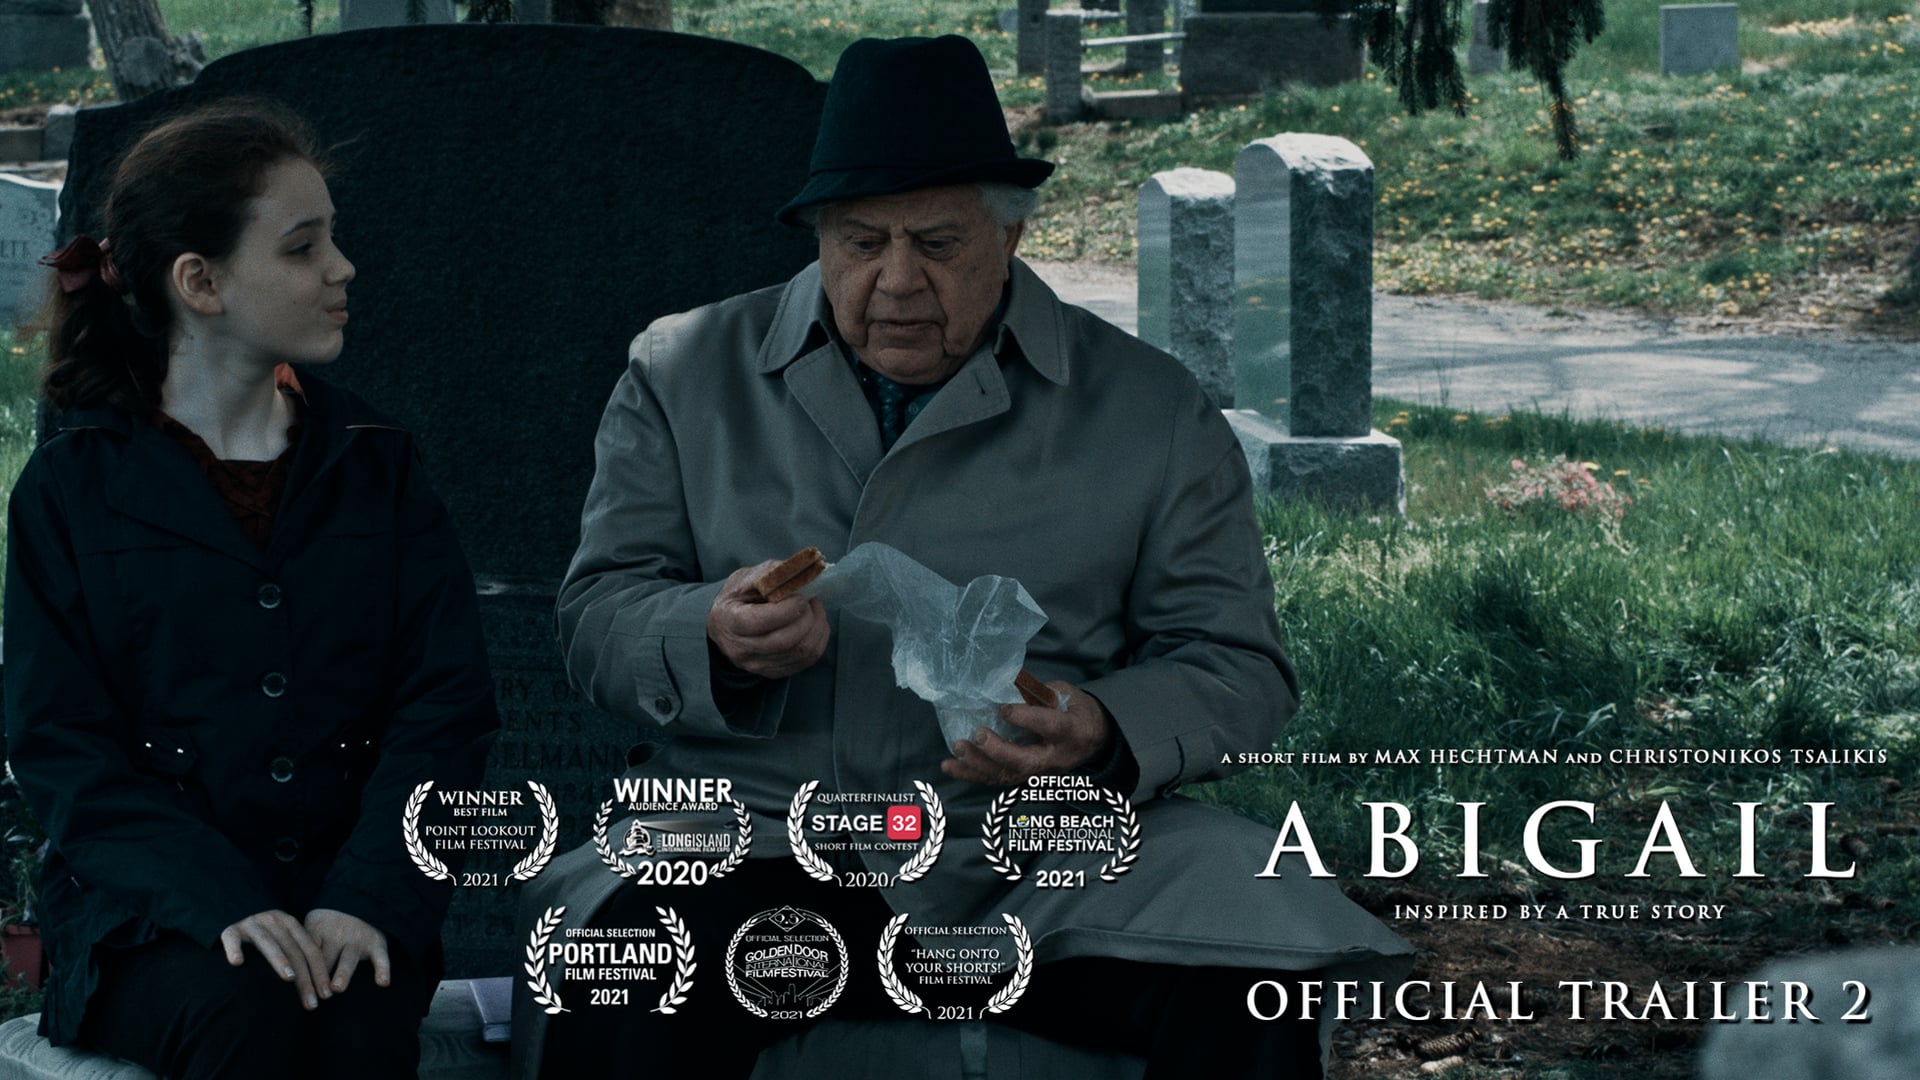 Abigail (2019 Short Film) - Trailer #2